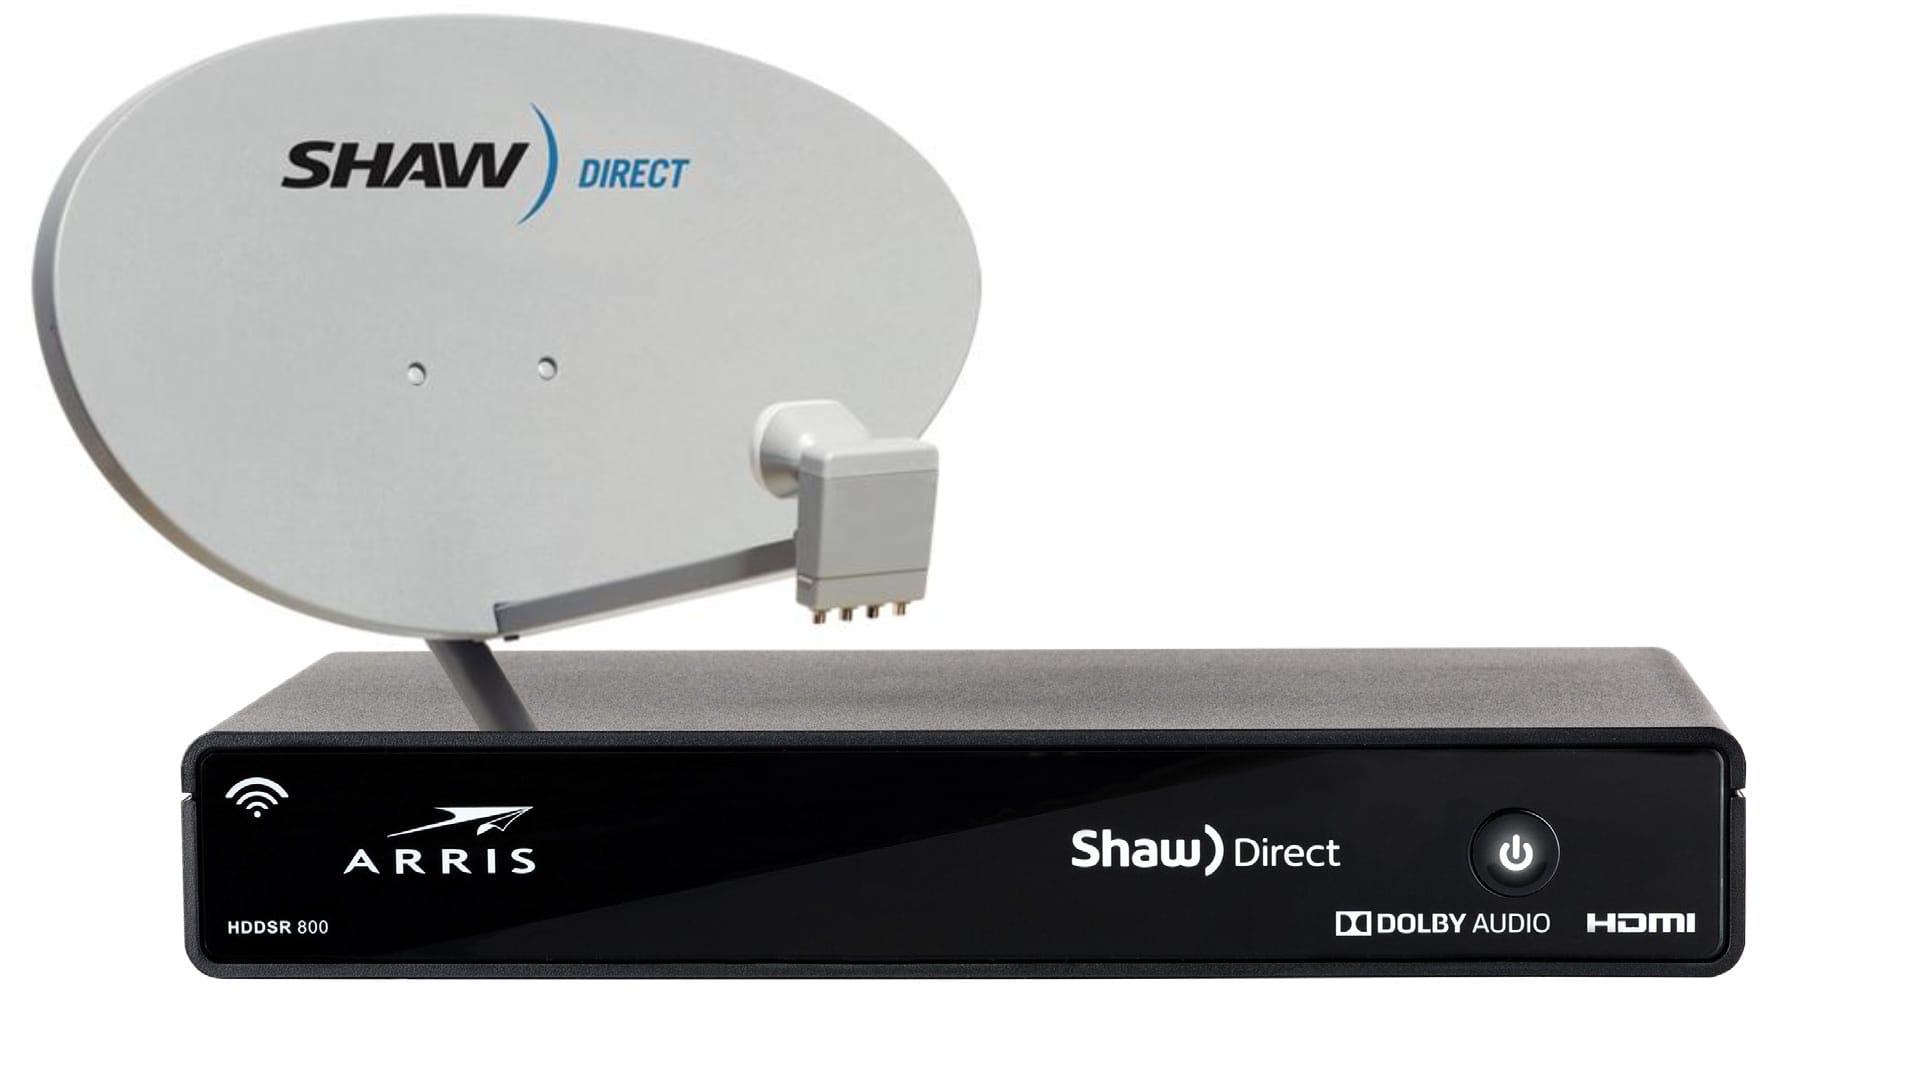 Shaw Direct receiver PVR bundle